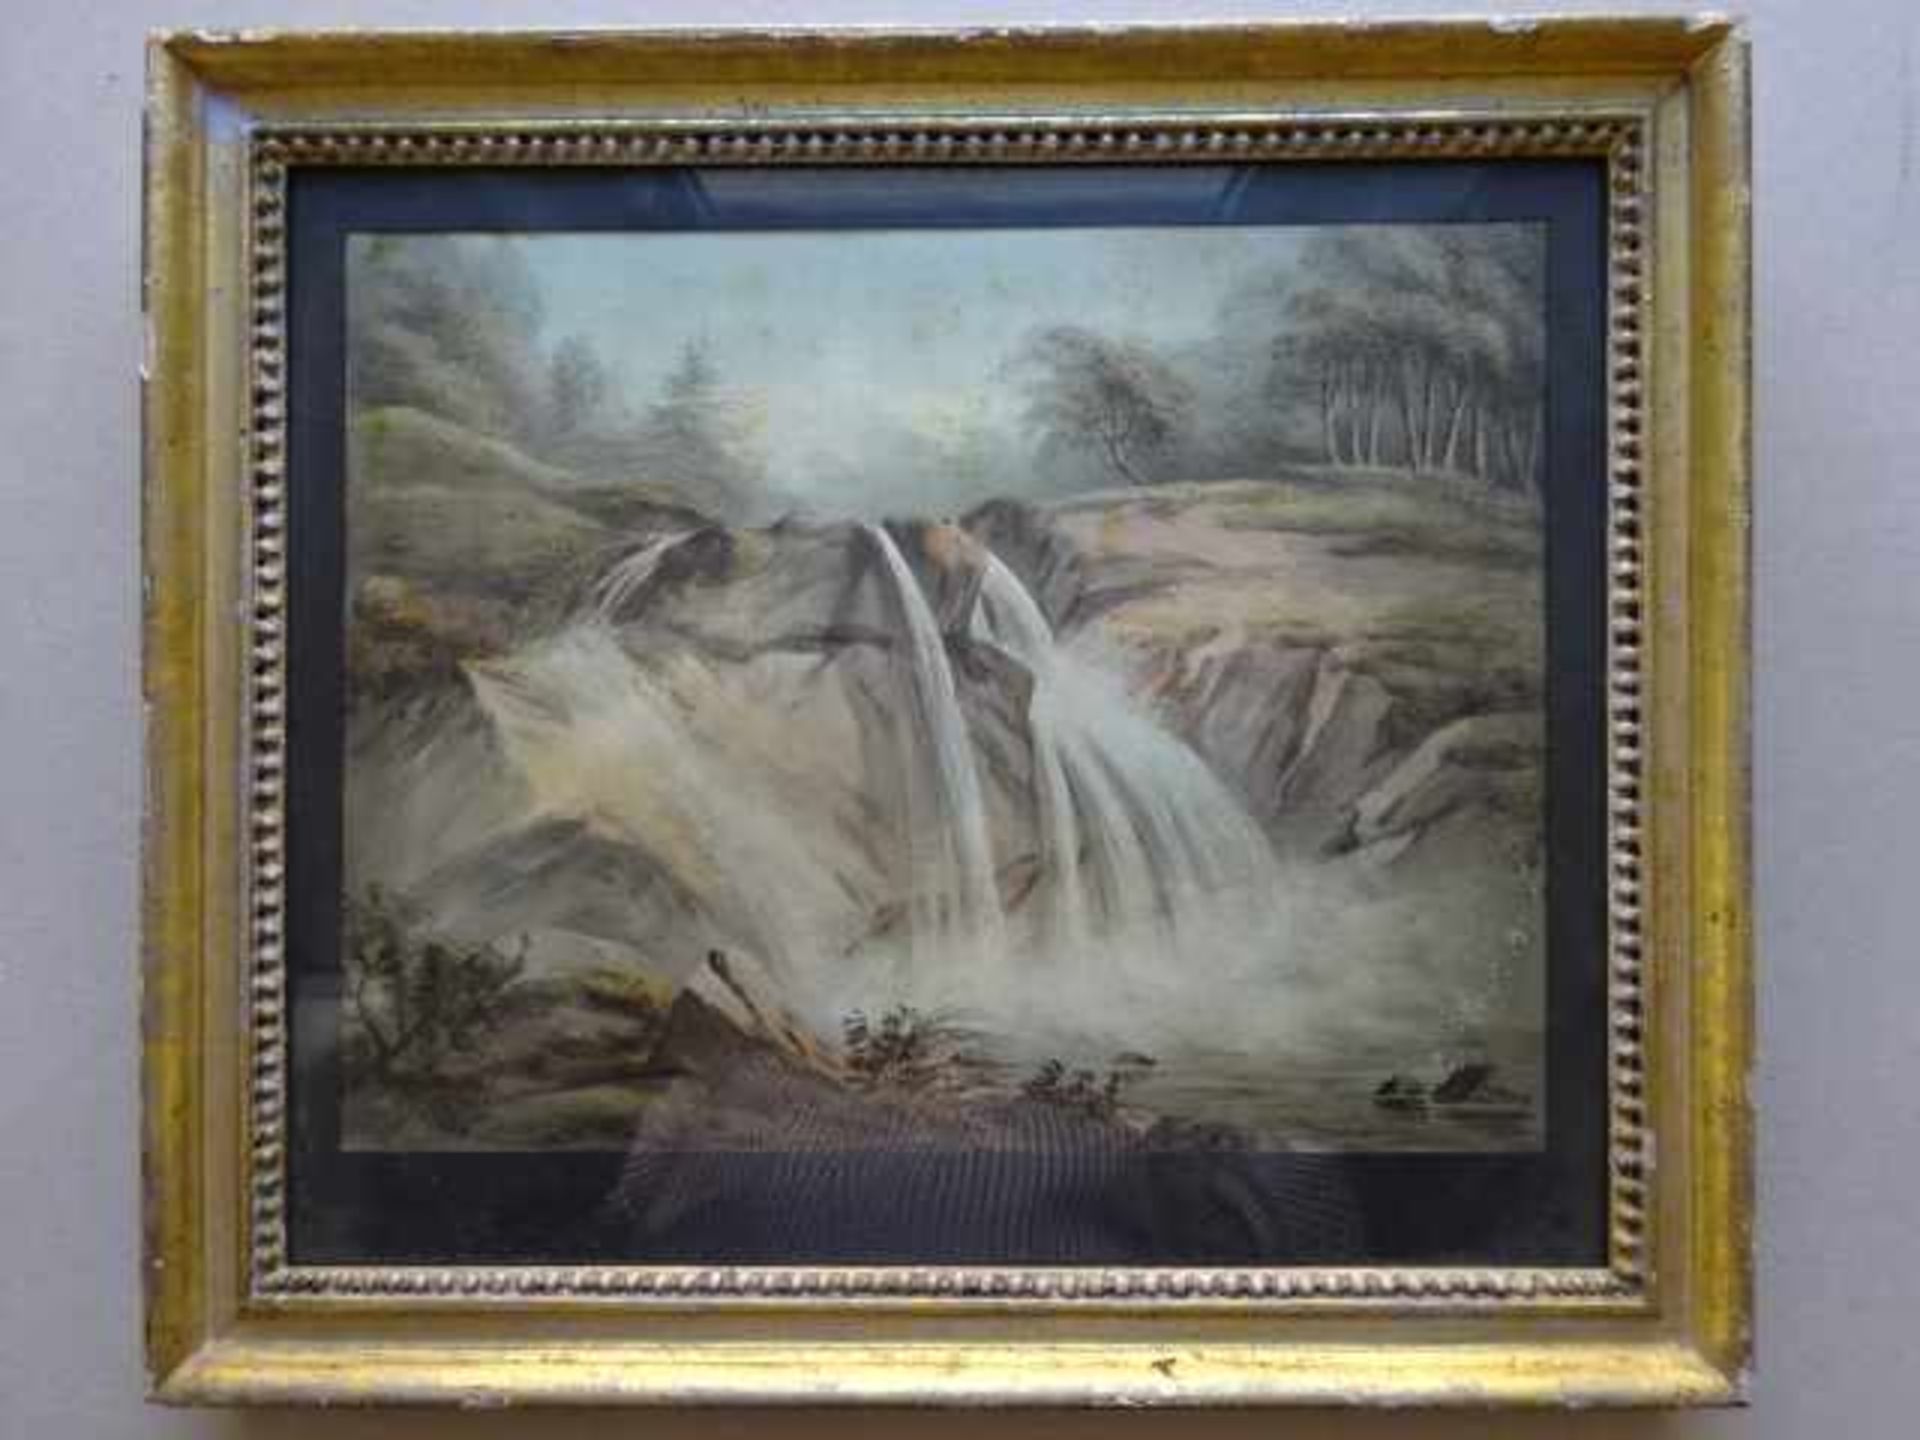 Anonym.- Wasserfall. Aquarell. Wohl England, um 1820. 20,5 x 26,5 cm. Gerahmt. Wasserfall in